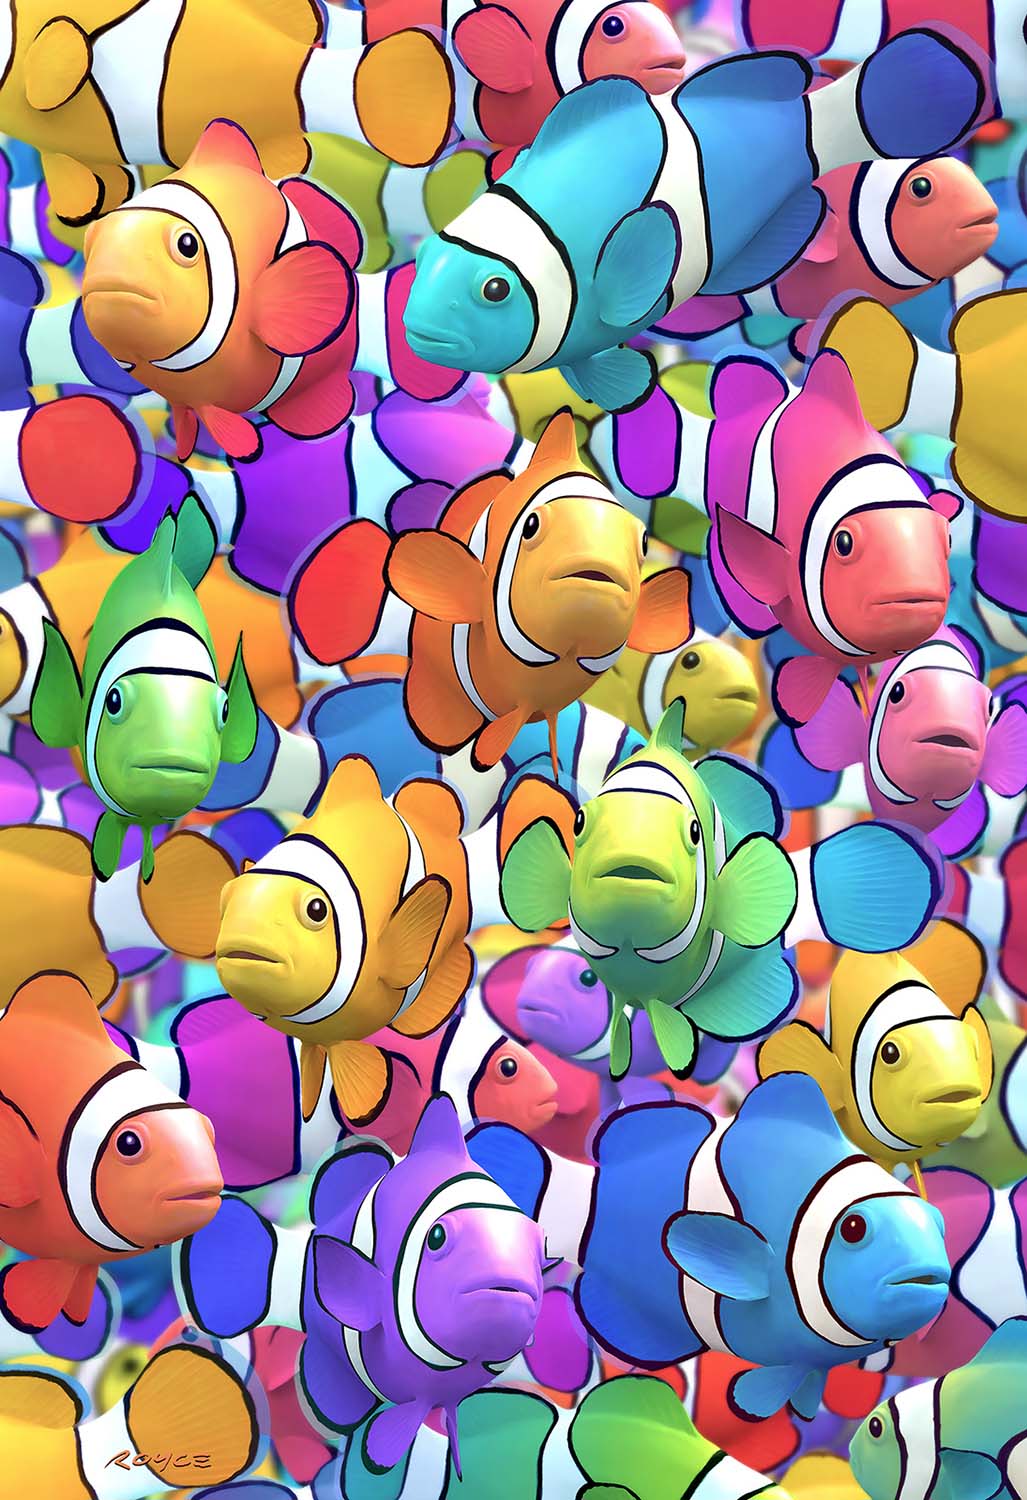 Super Deep 3D - Clown Magic Fish Jigsaw Puzzle